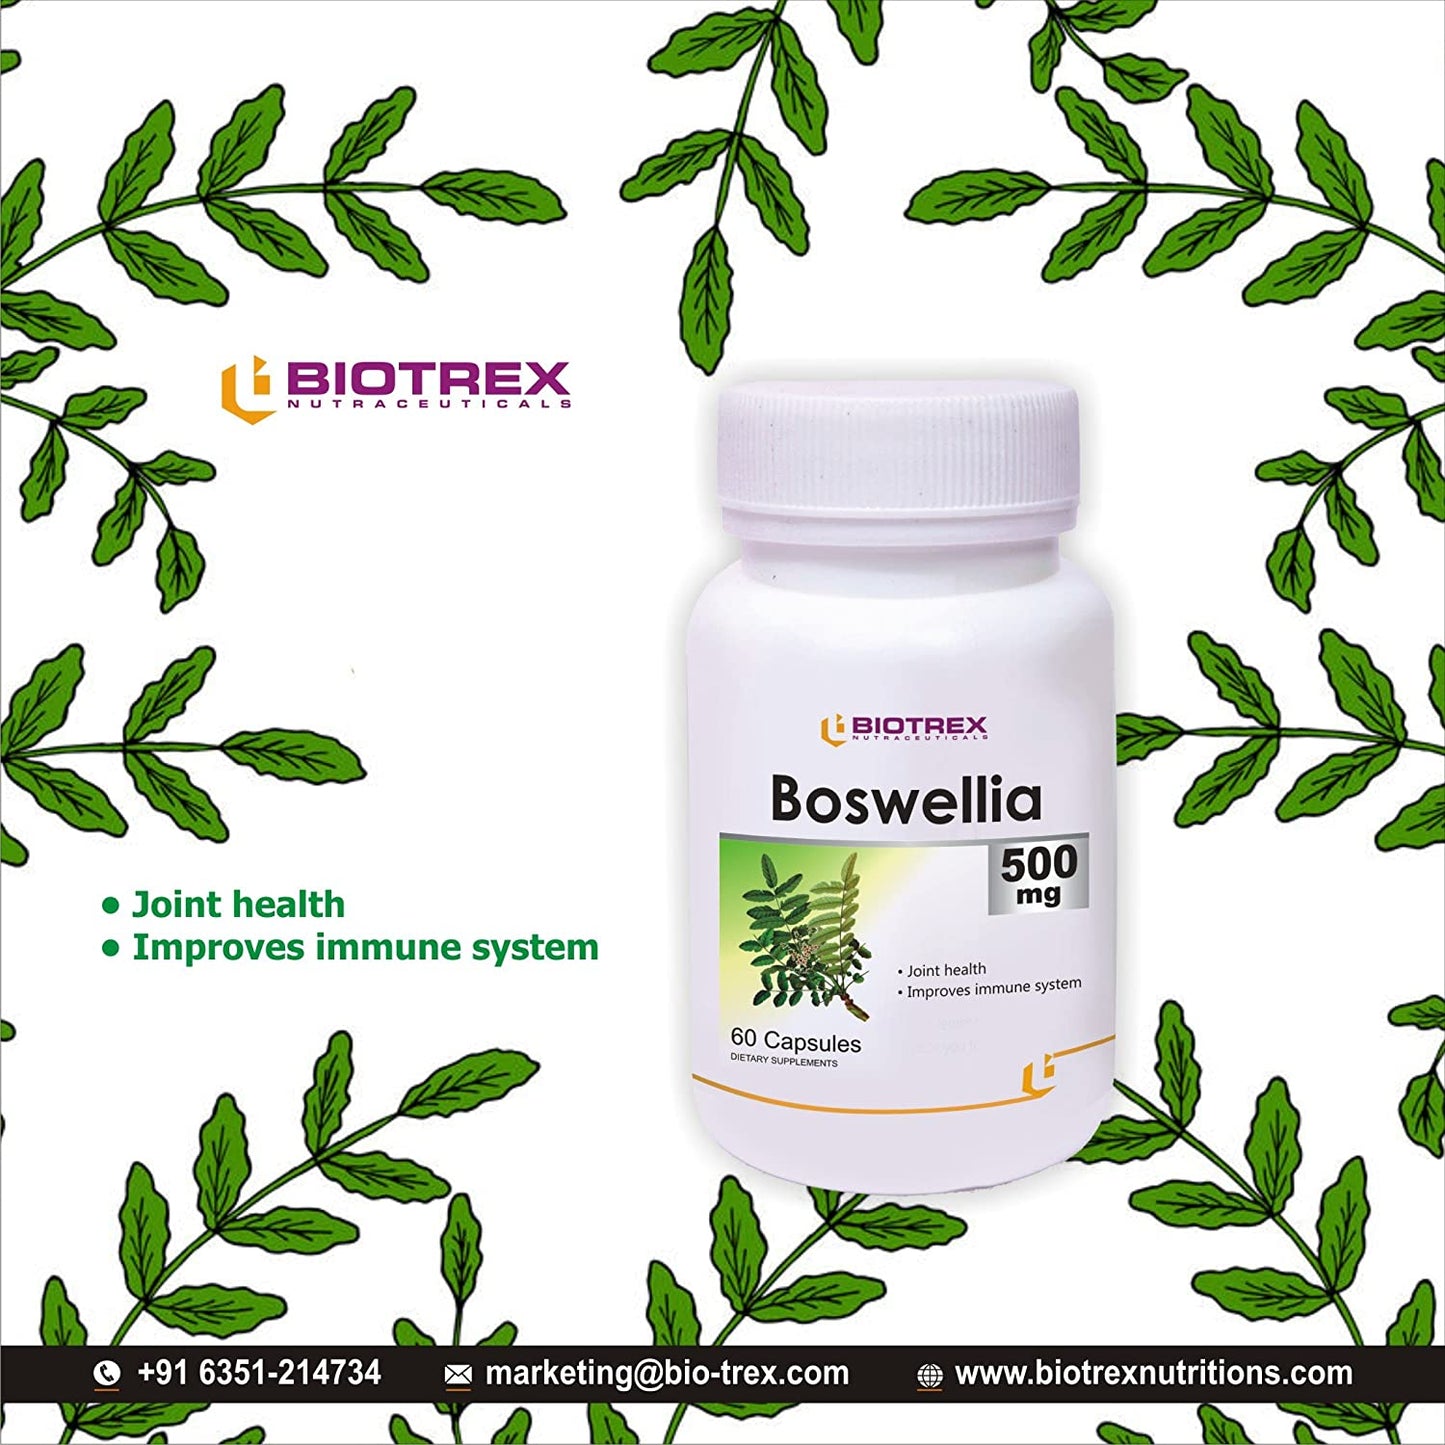 Biotrex Boswellia 500mg - 60 Capsules